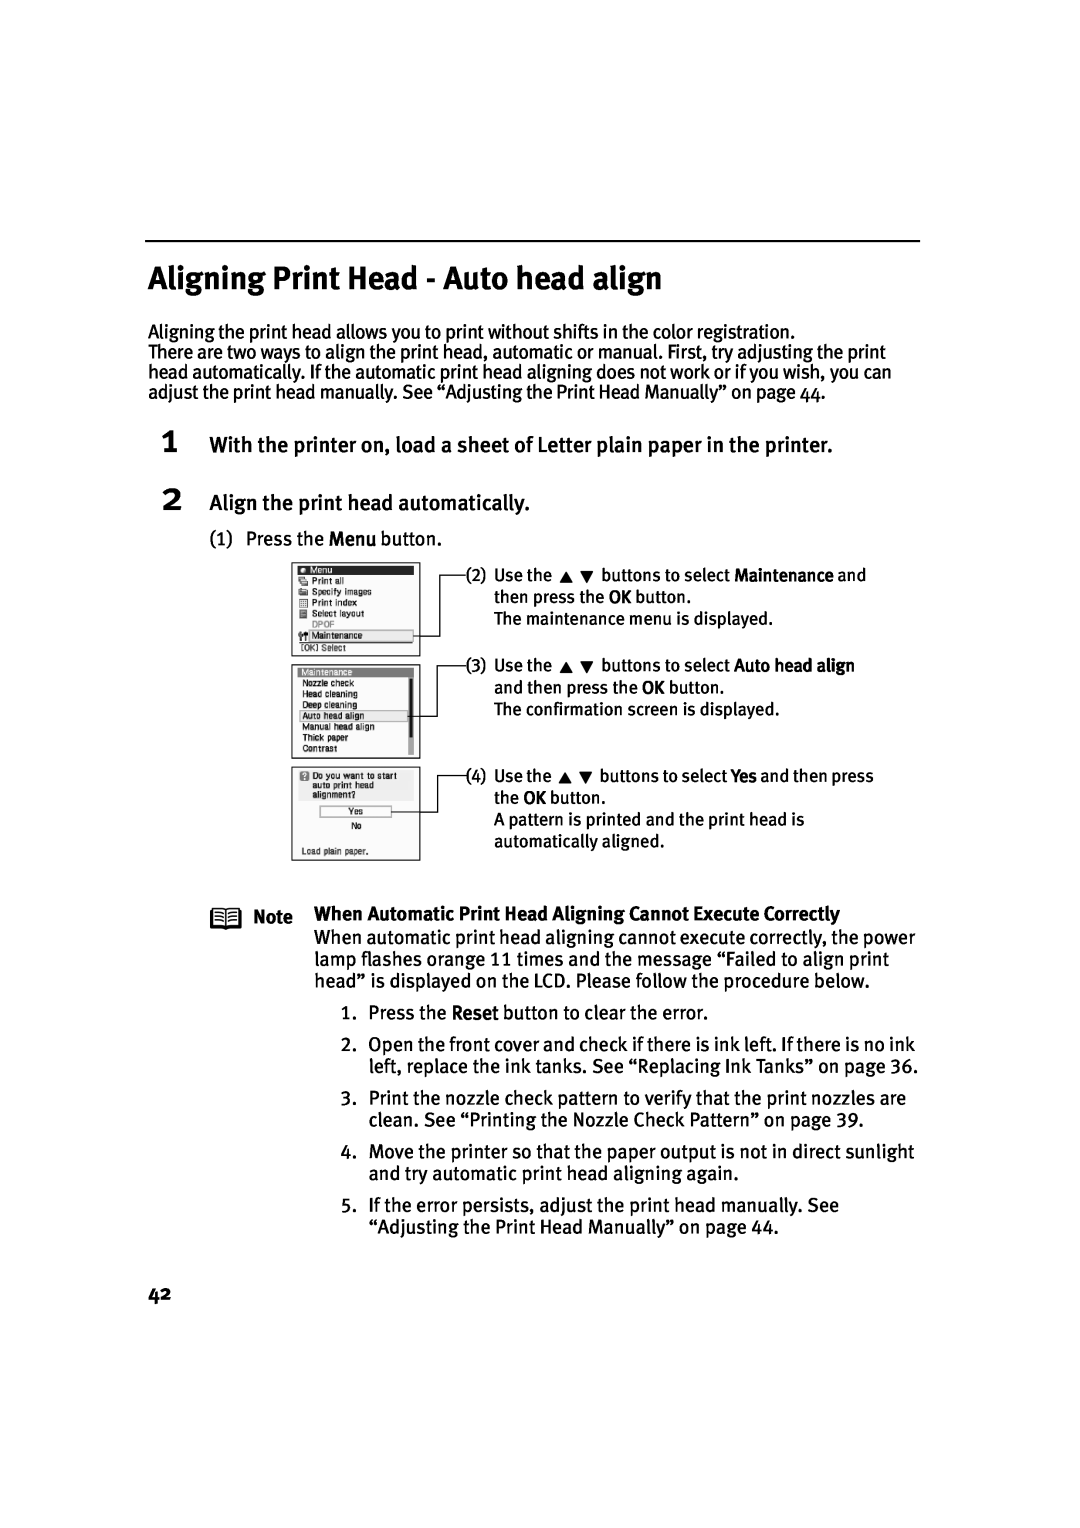 Canon 900D manual Aligning Print Head - Auto head align, Align the print head automatically 